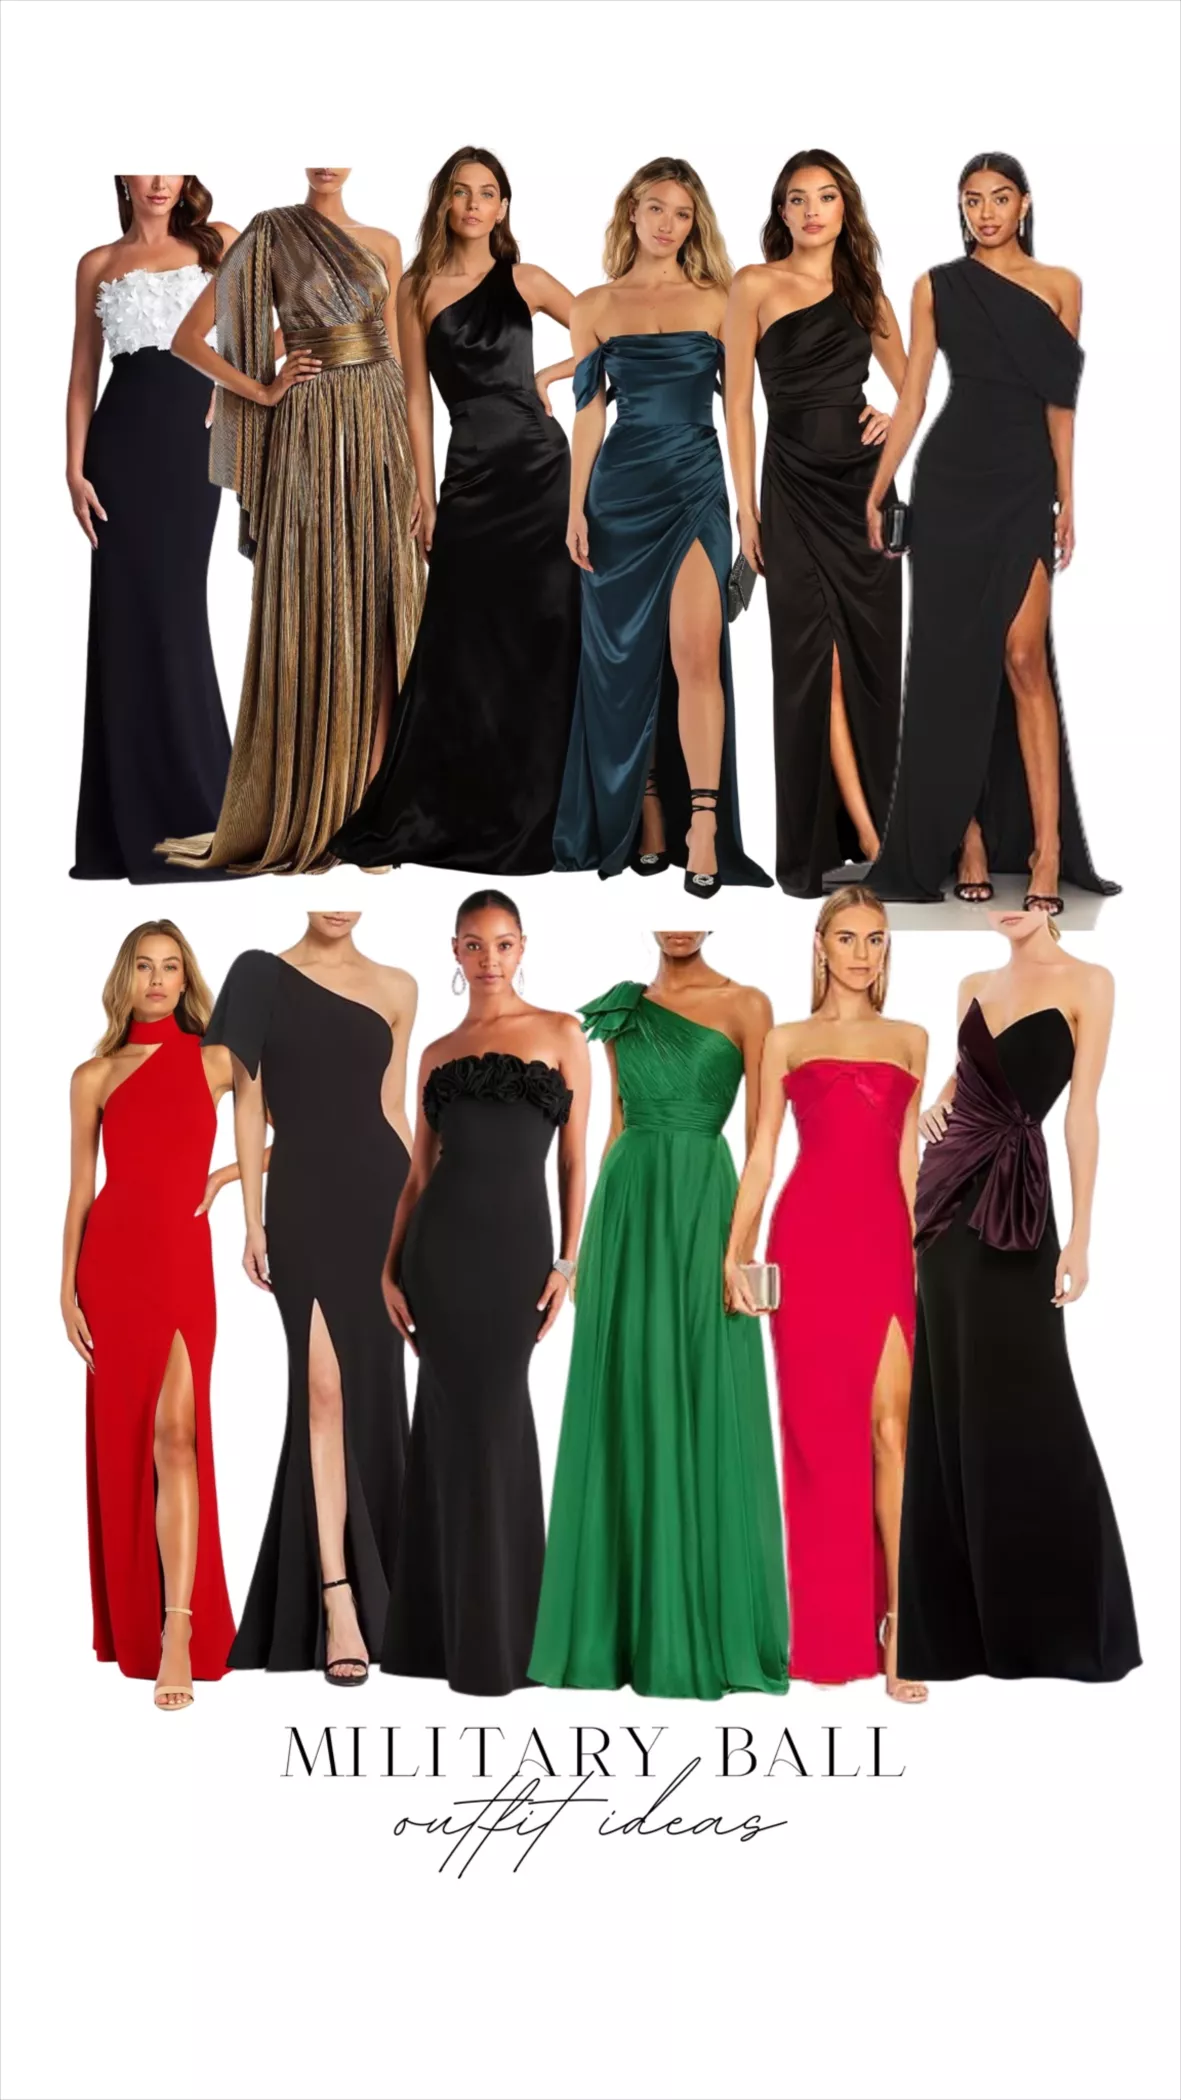 On the Guest List Black Satin One-Shoulder Maxi Dress